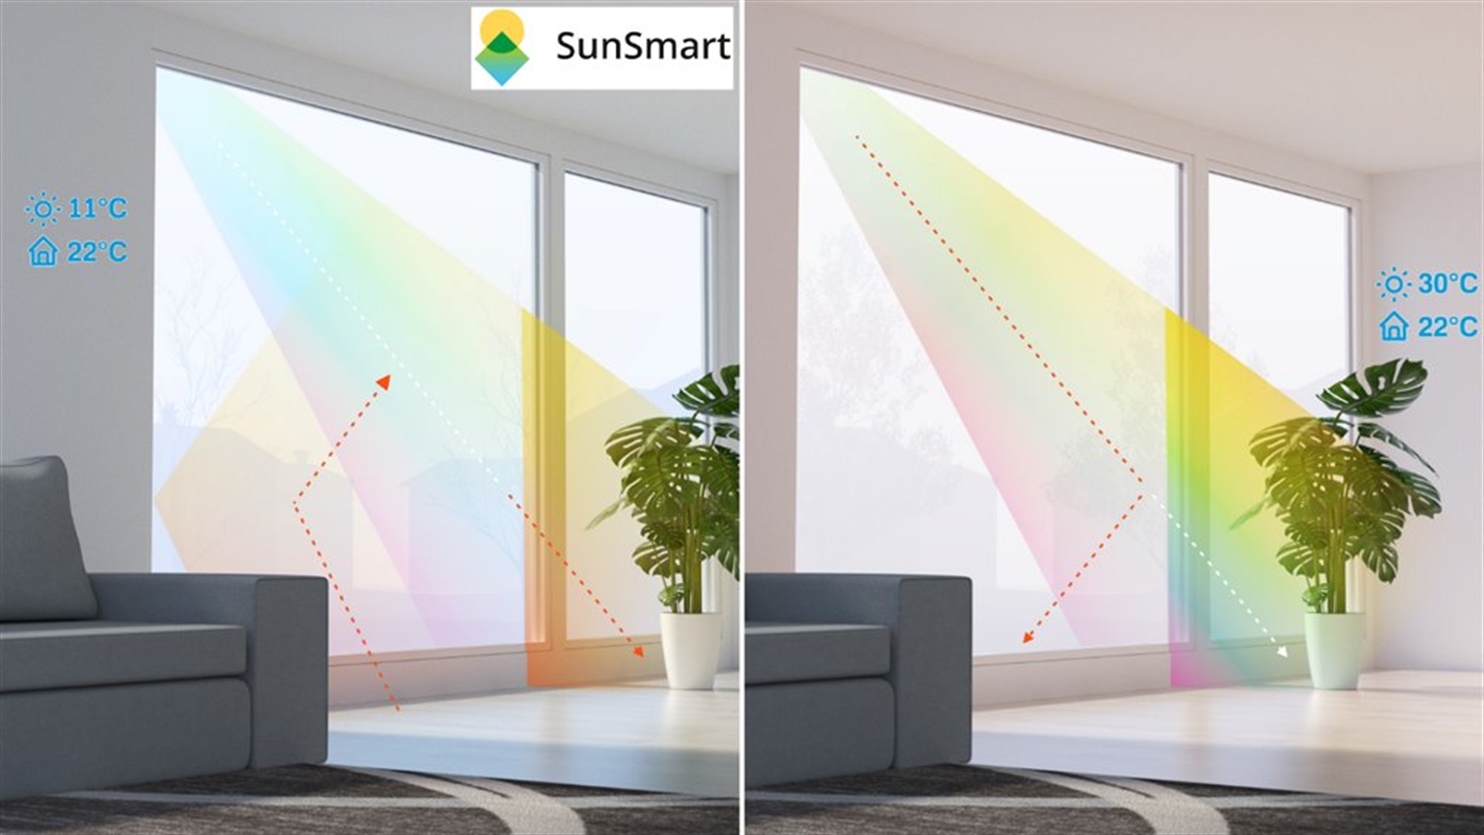 SunSmart smart windows